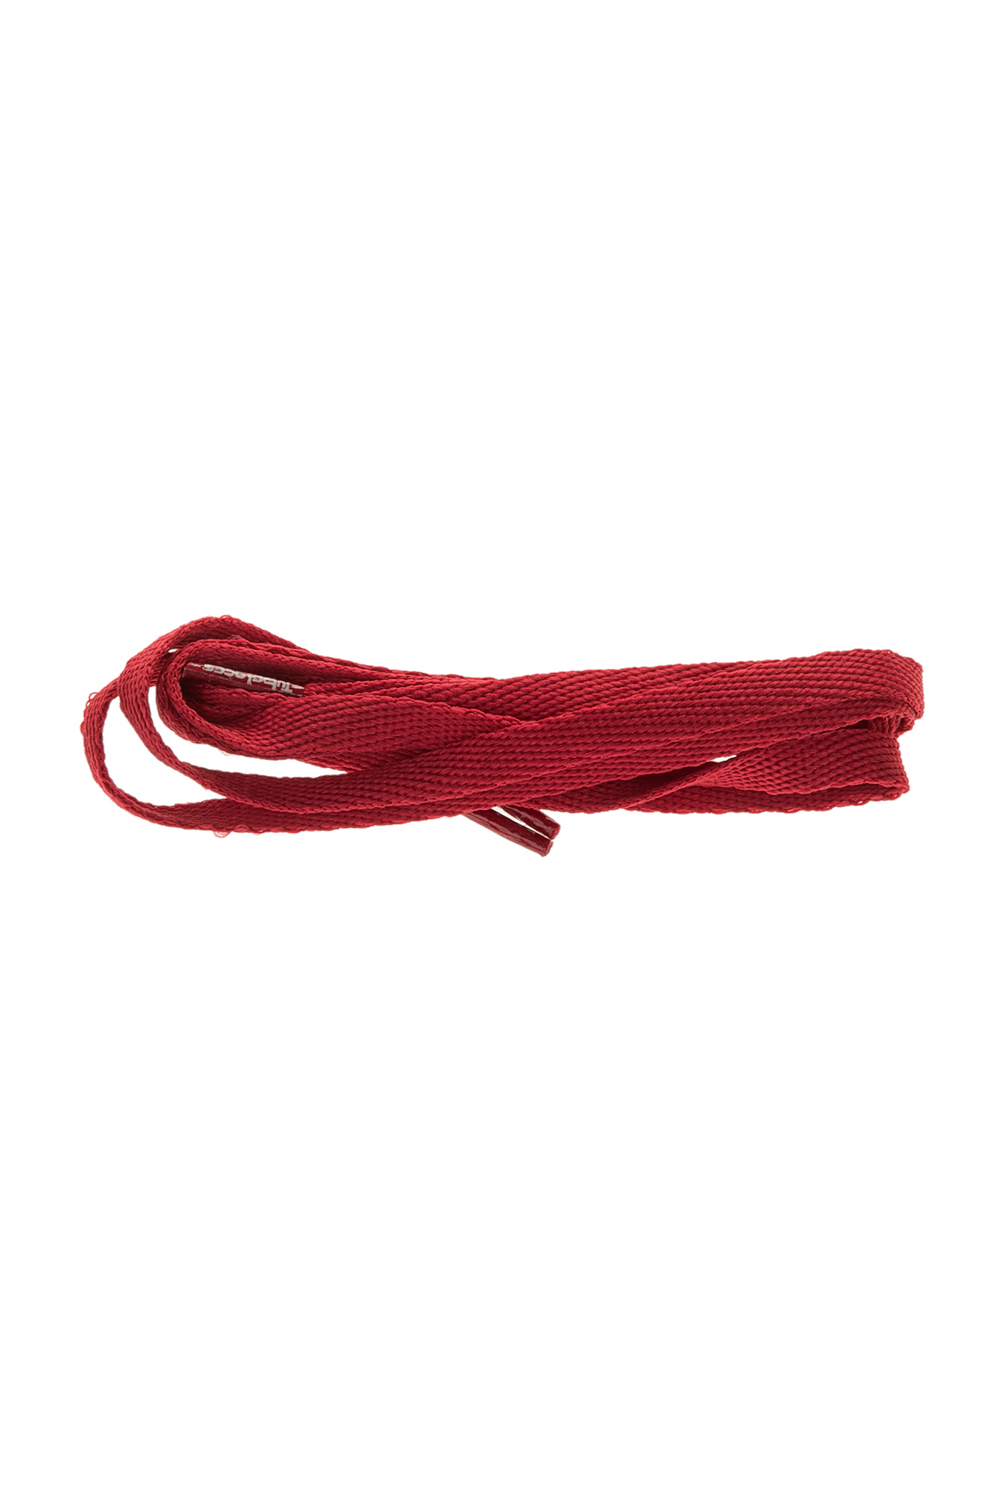 TUBELACES – Unisex κορδόνια TUBELACES WHITE FLAT κόκκινα 1670412.0-0045